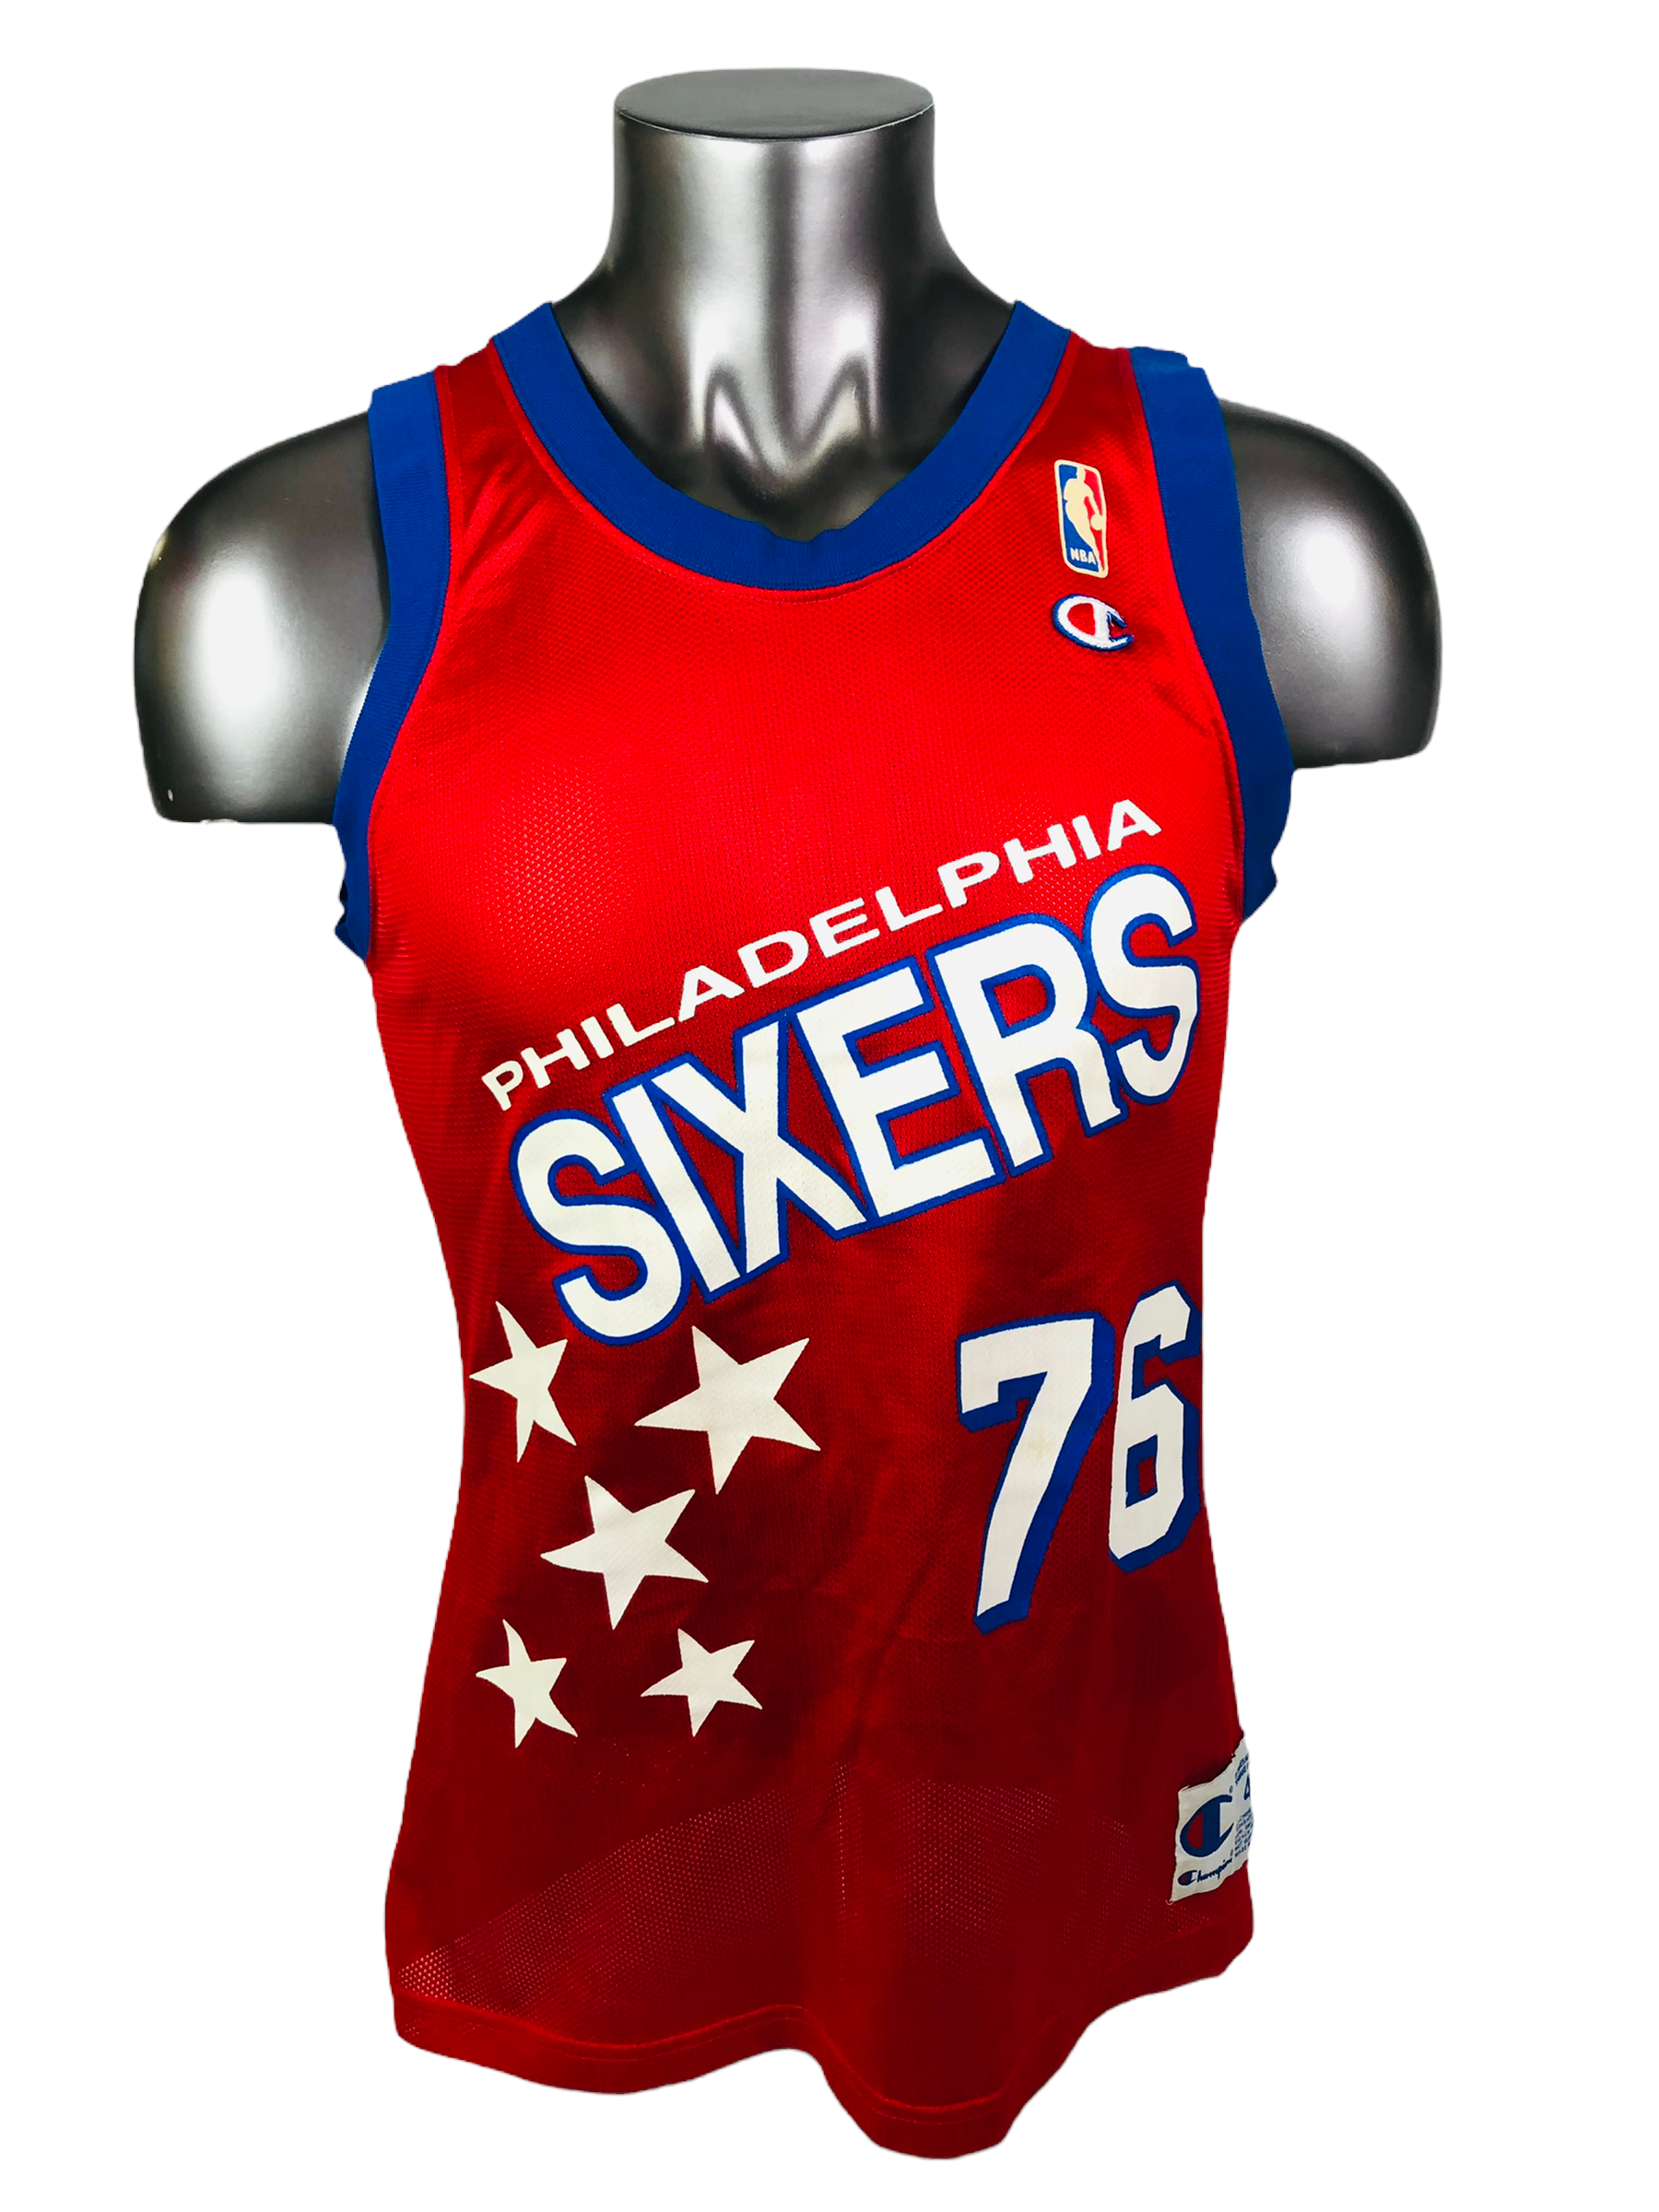 Philadelphia 76ers Gear, 76ers Jerseys, Store, 76ers Shop, Apparel